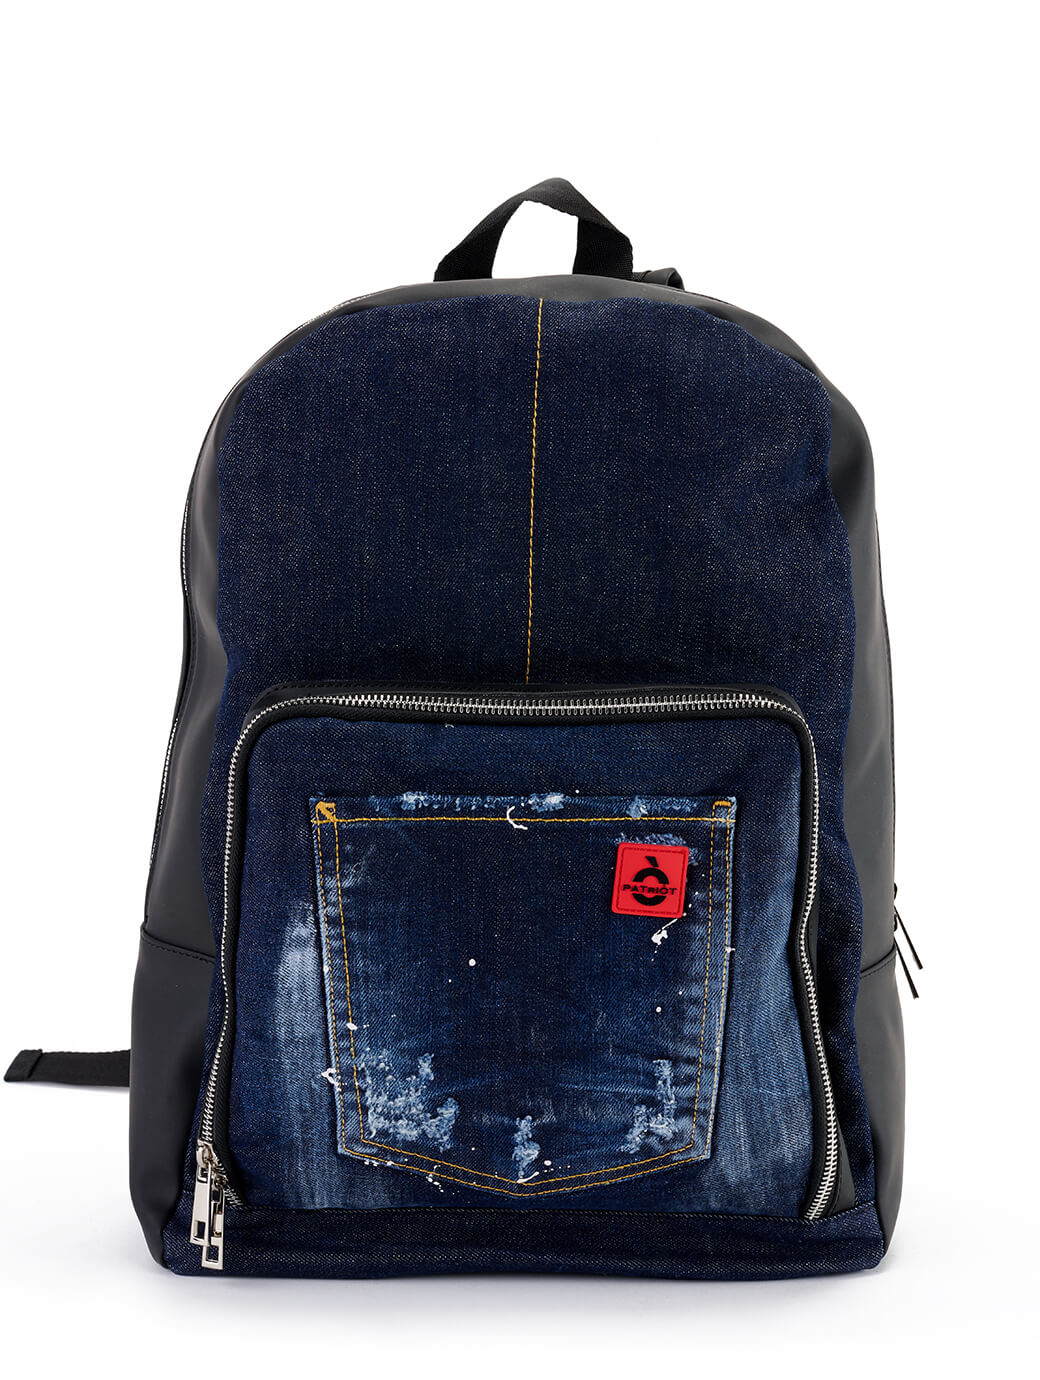 Backpack "Freelife"